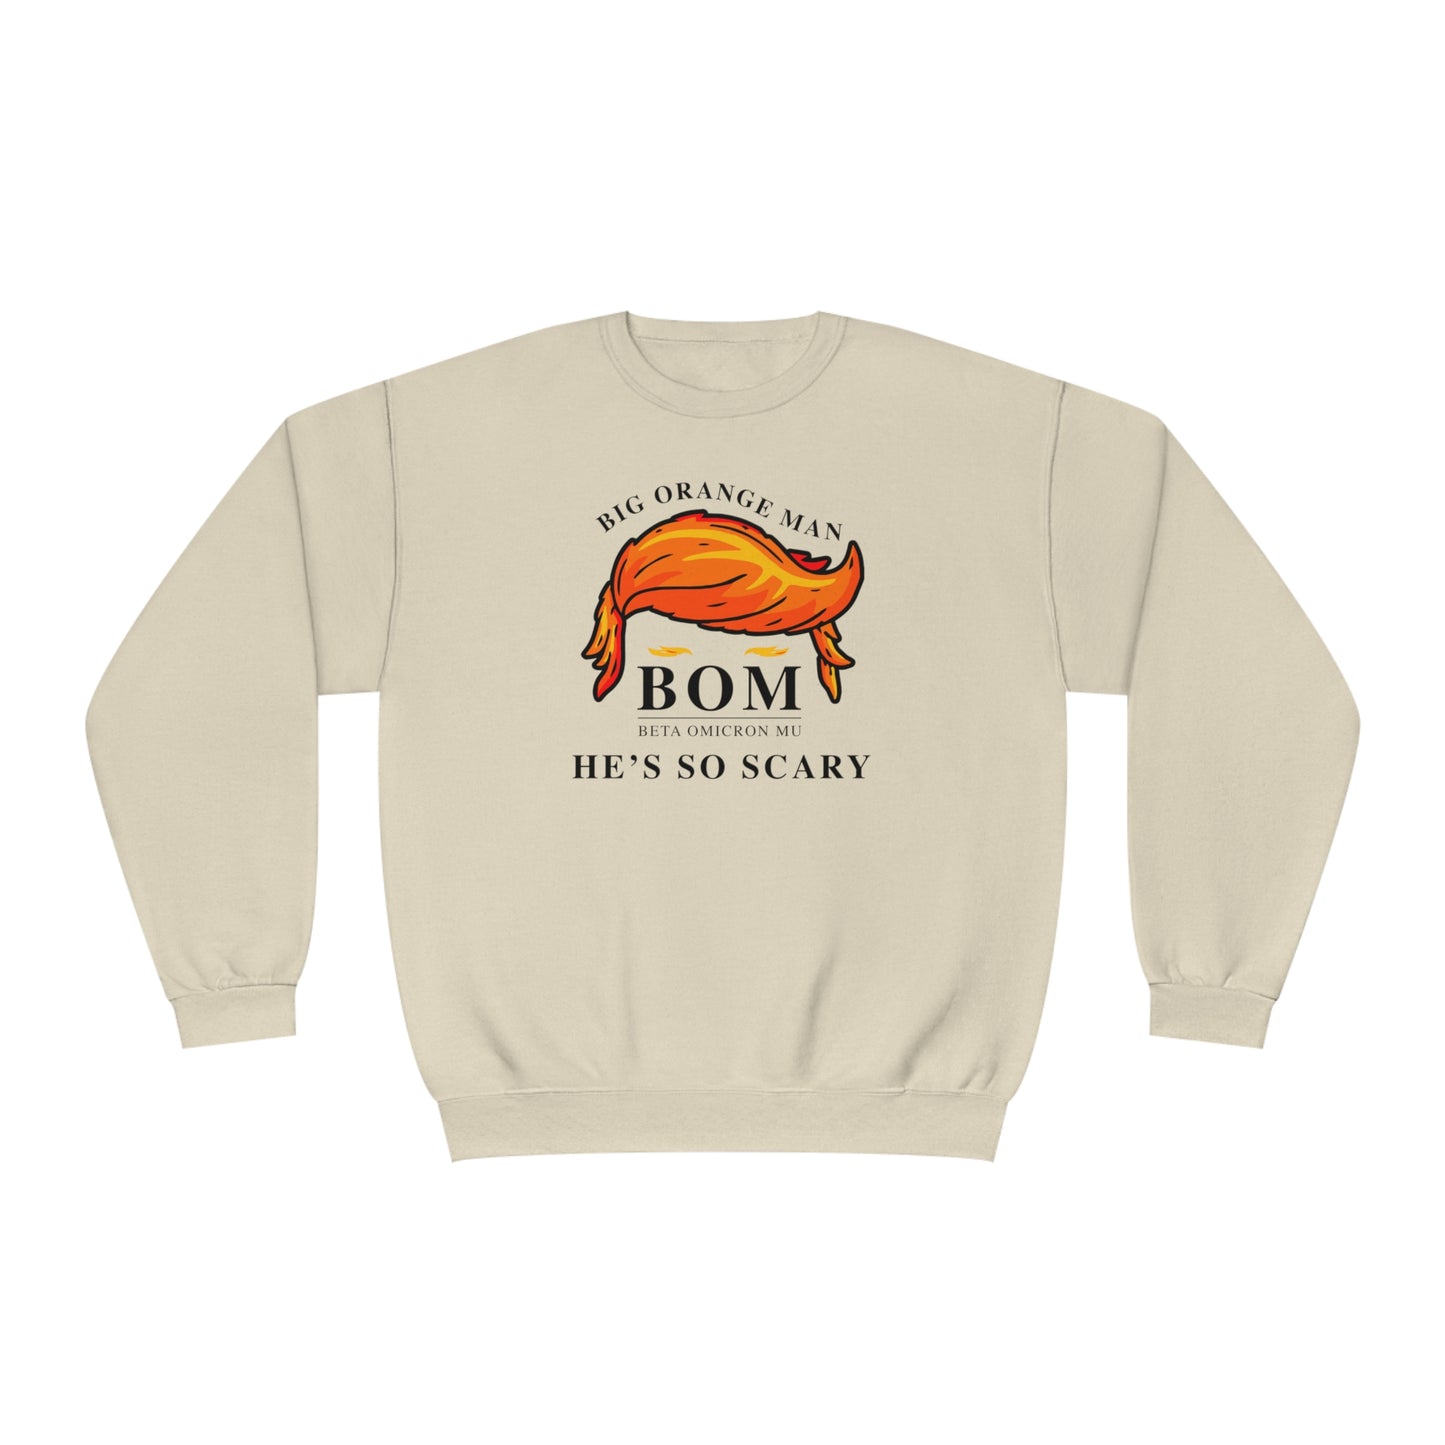 BOM - Big Orange Man Sweatshirt